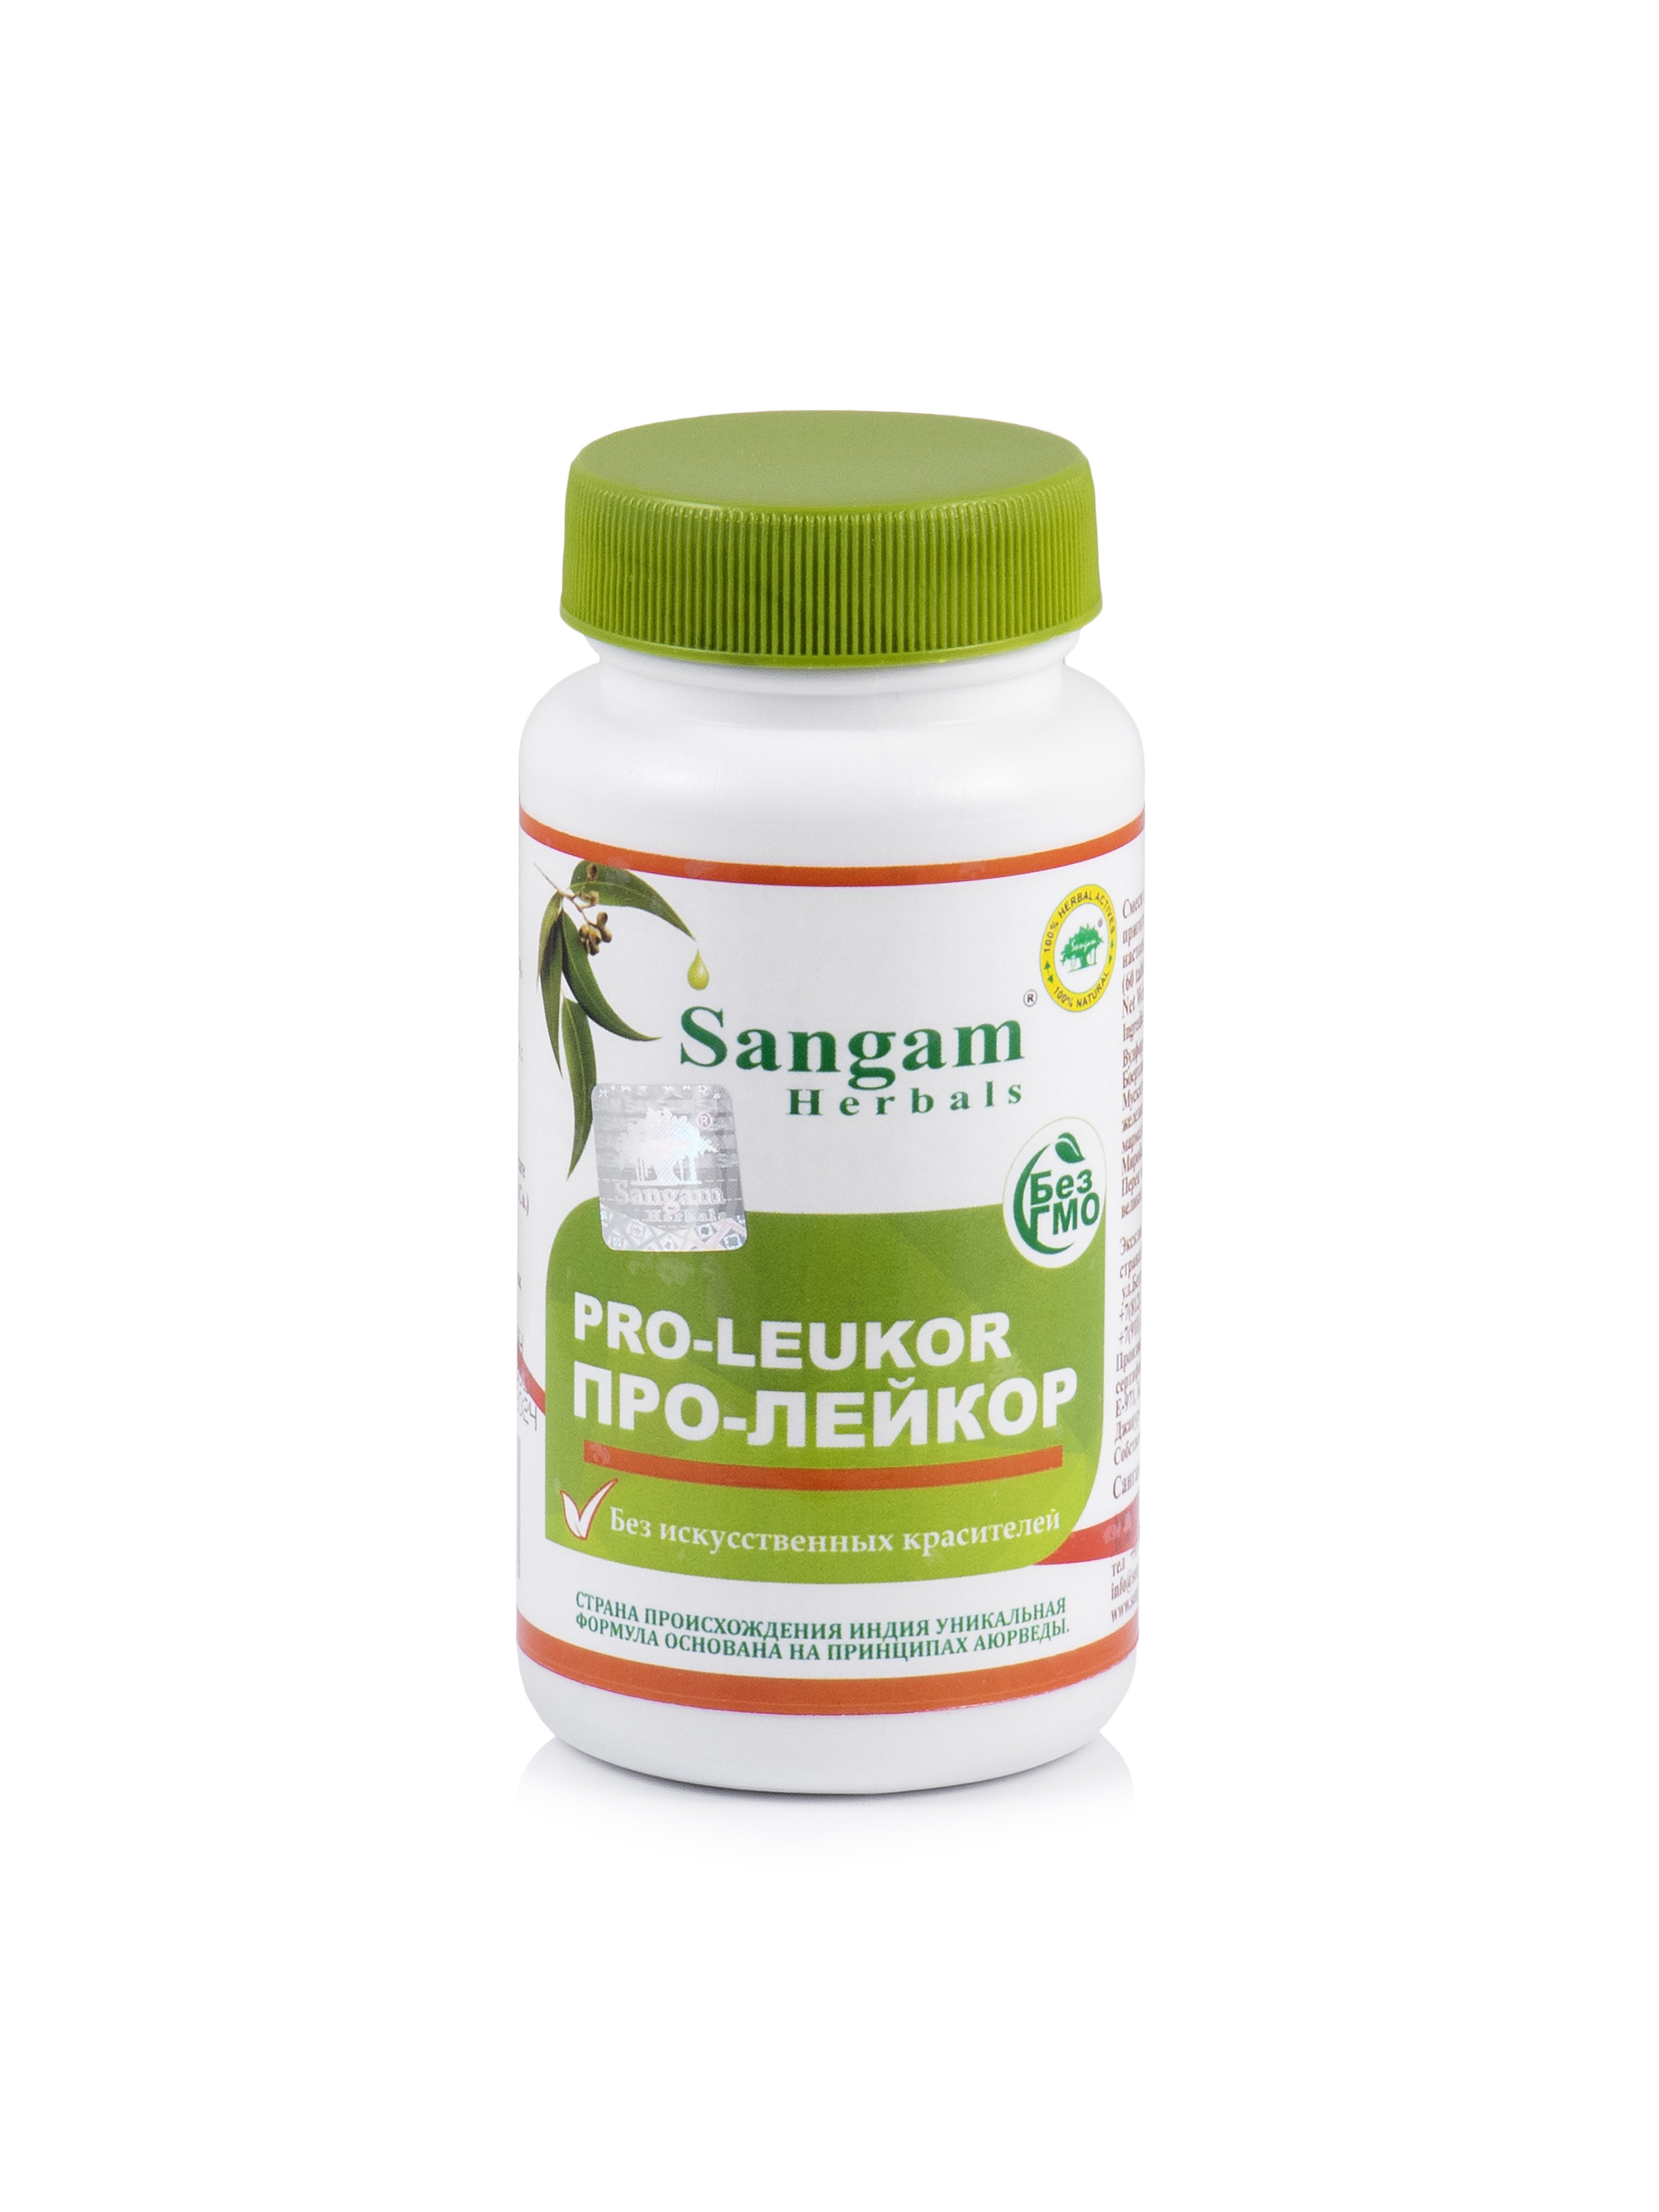 PRO-LEUKOR, Sangam Herbals (ПРО-ЛЕЙКОР, Сангам Хербалс), 60 таб. по 750 мг.